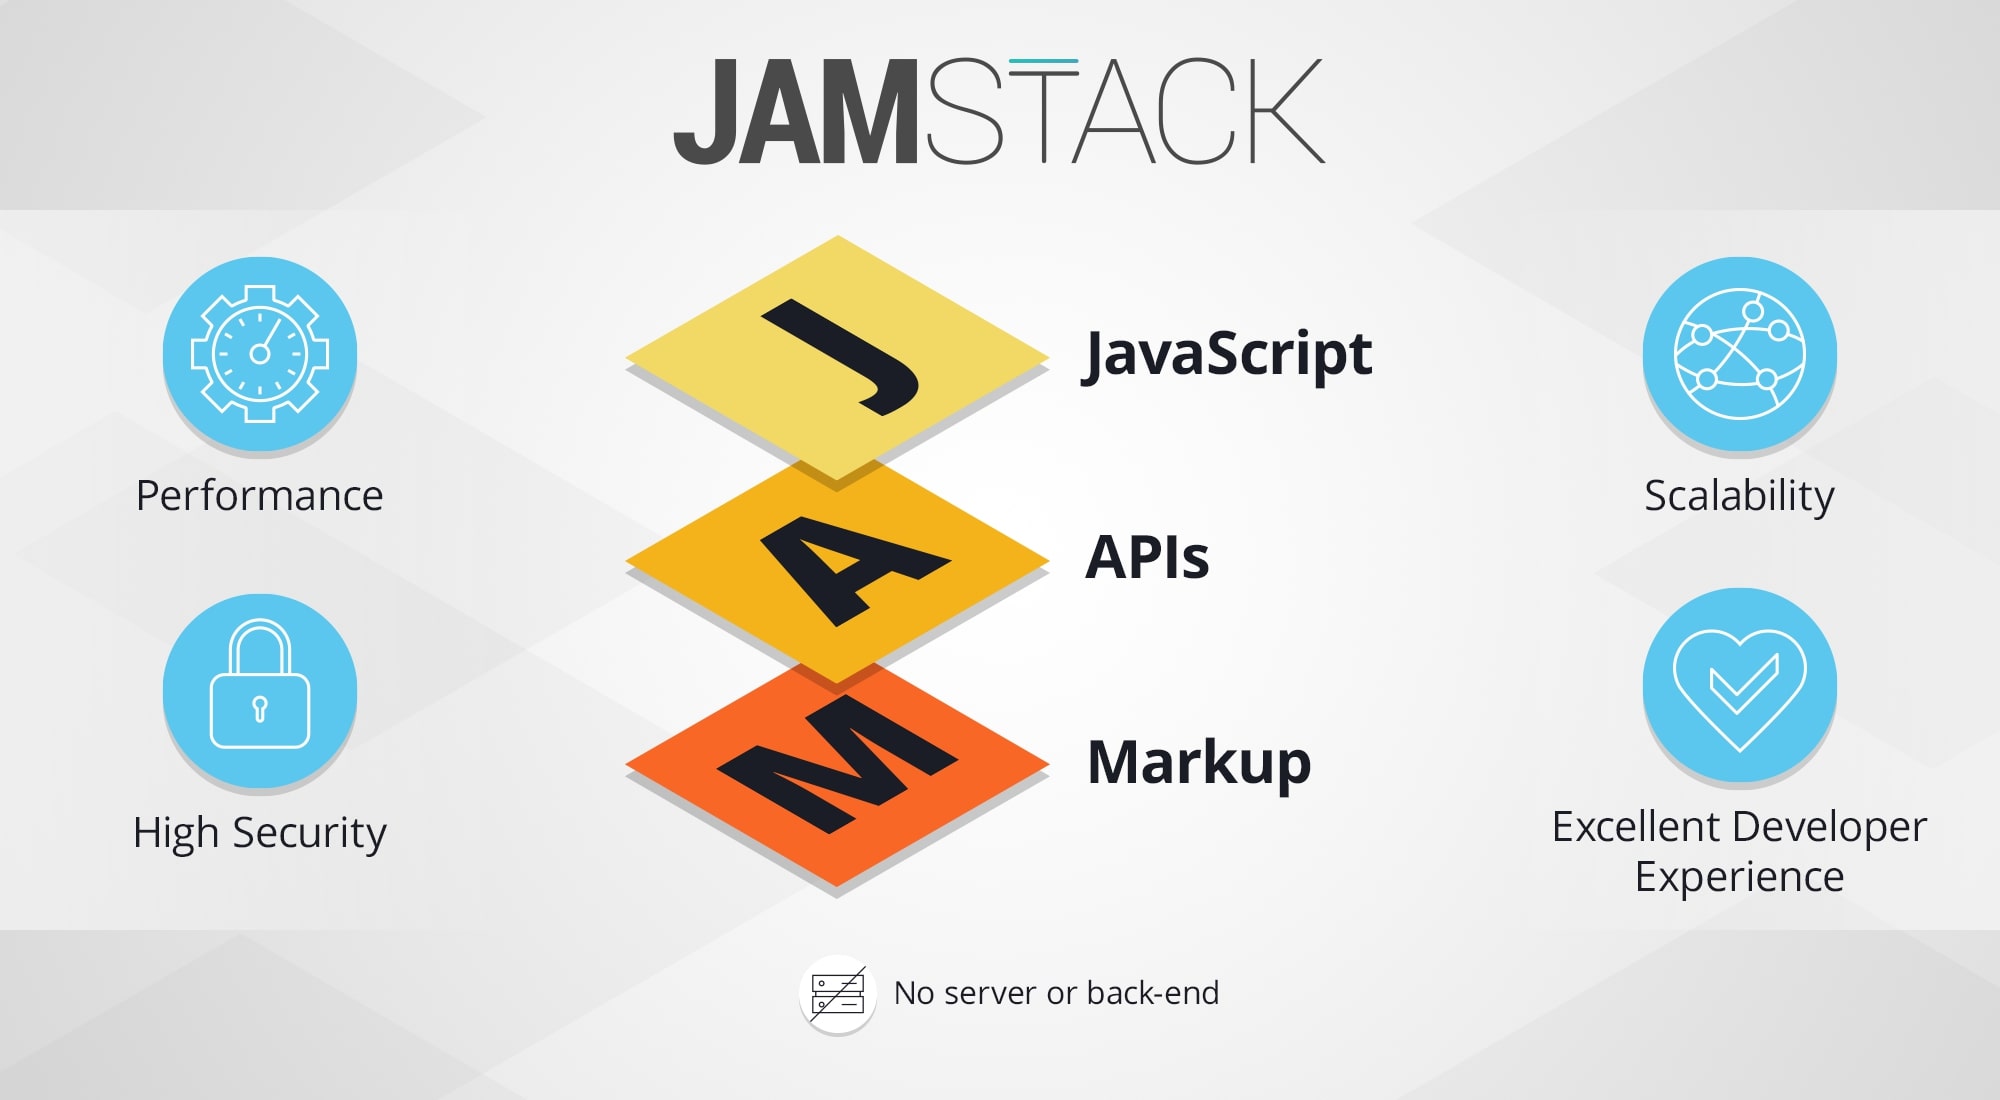 Kiến trúc phát triển website Jamstack. Ảnh: Cloudinary